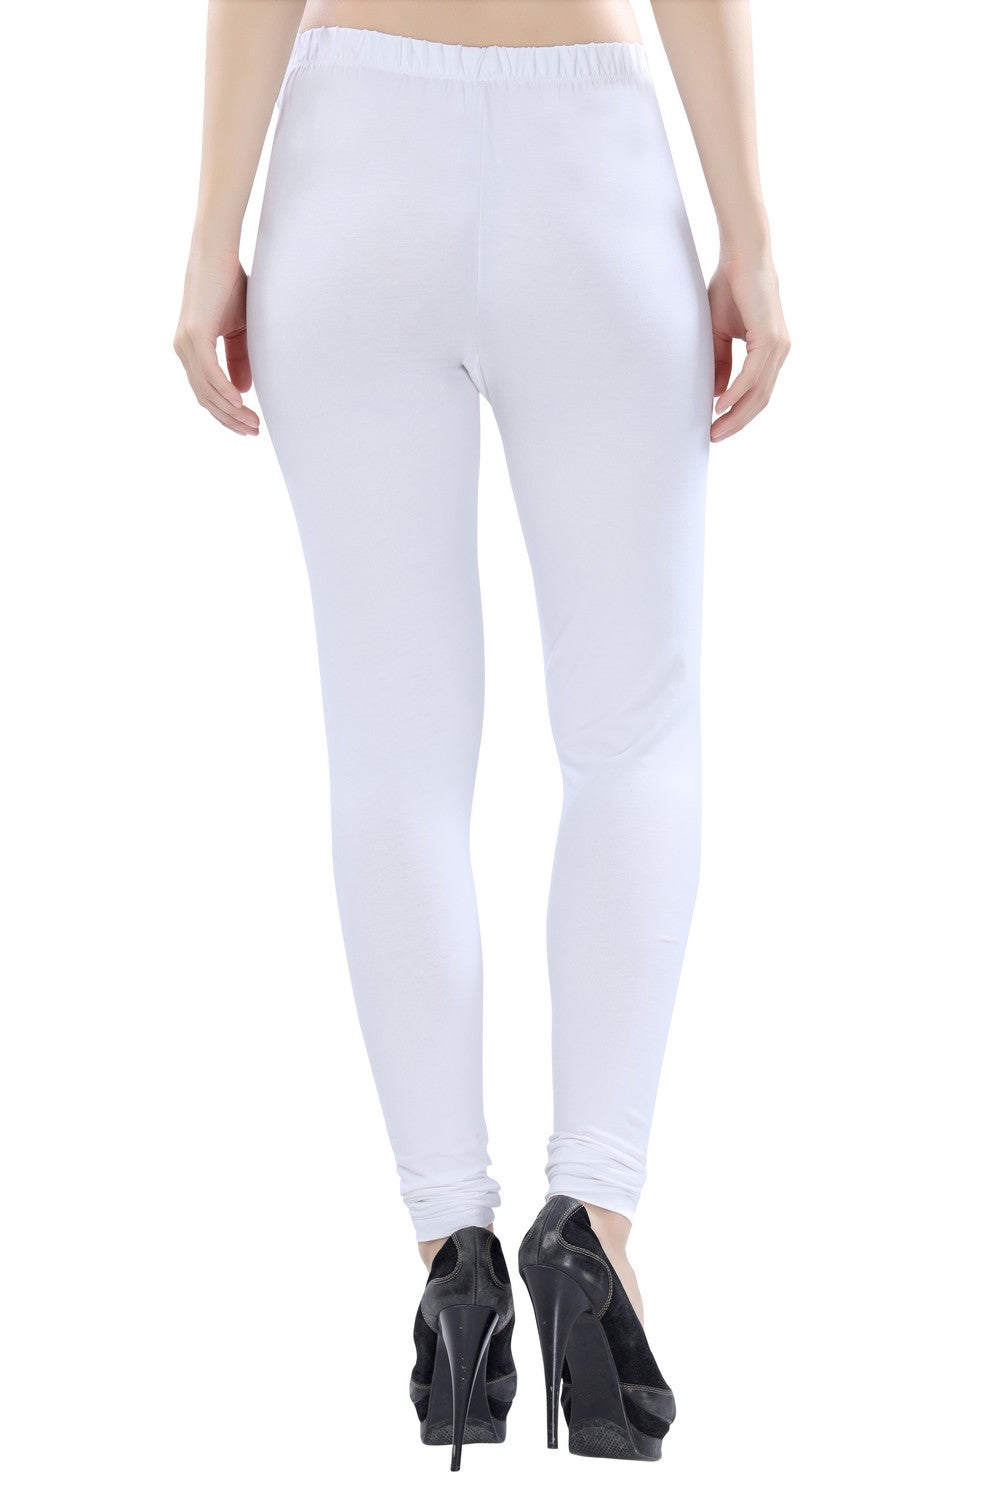 TRASA Women's Cotton 4 Way Stretchable Slim Fit Churidar Leggings -  Off-White